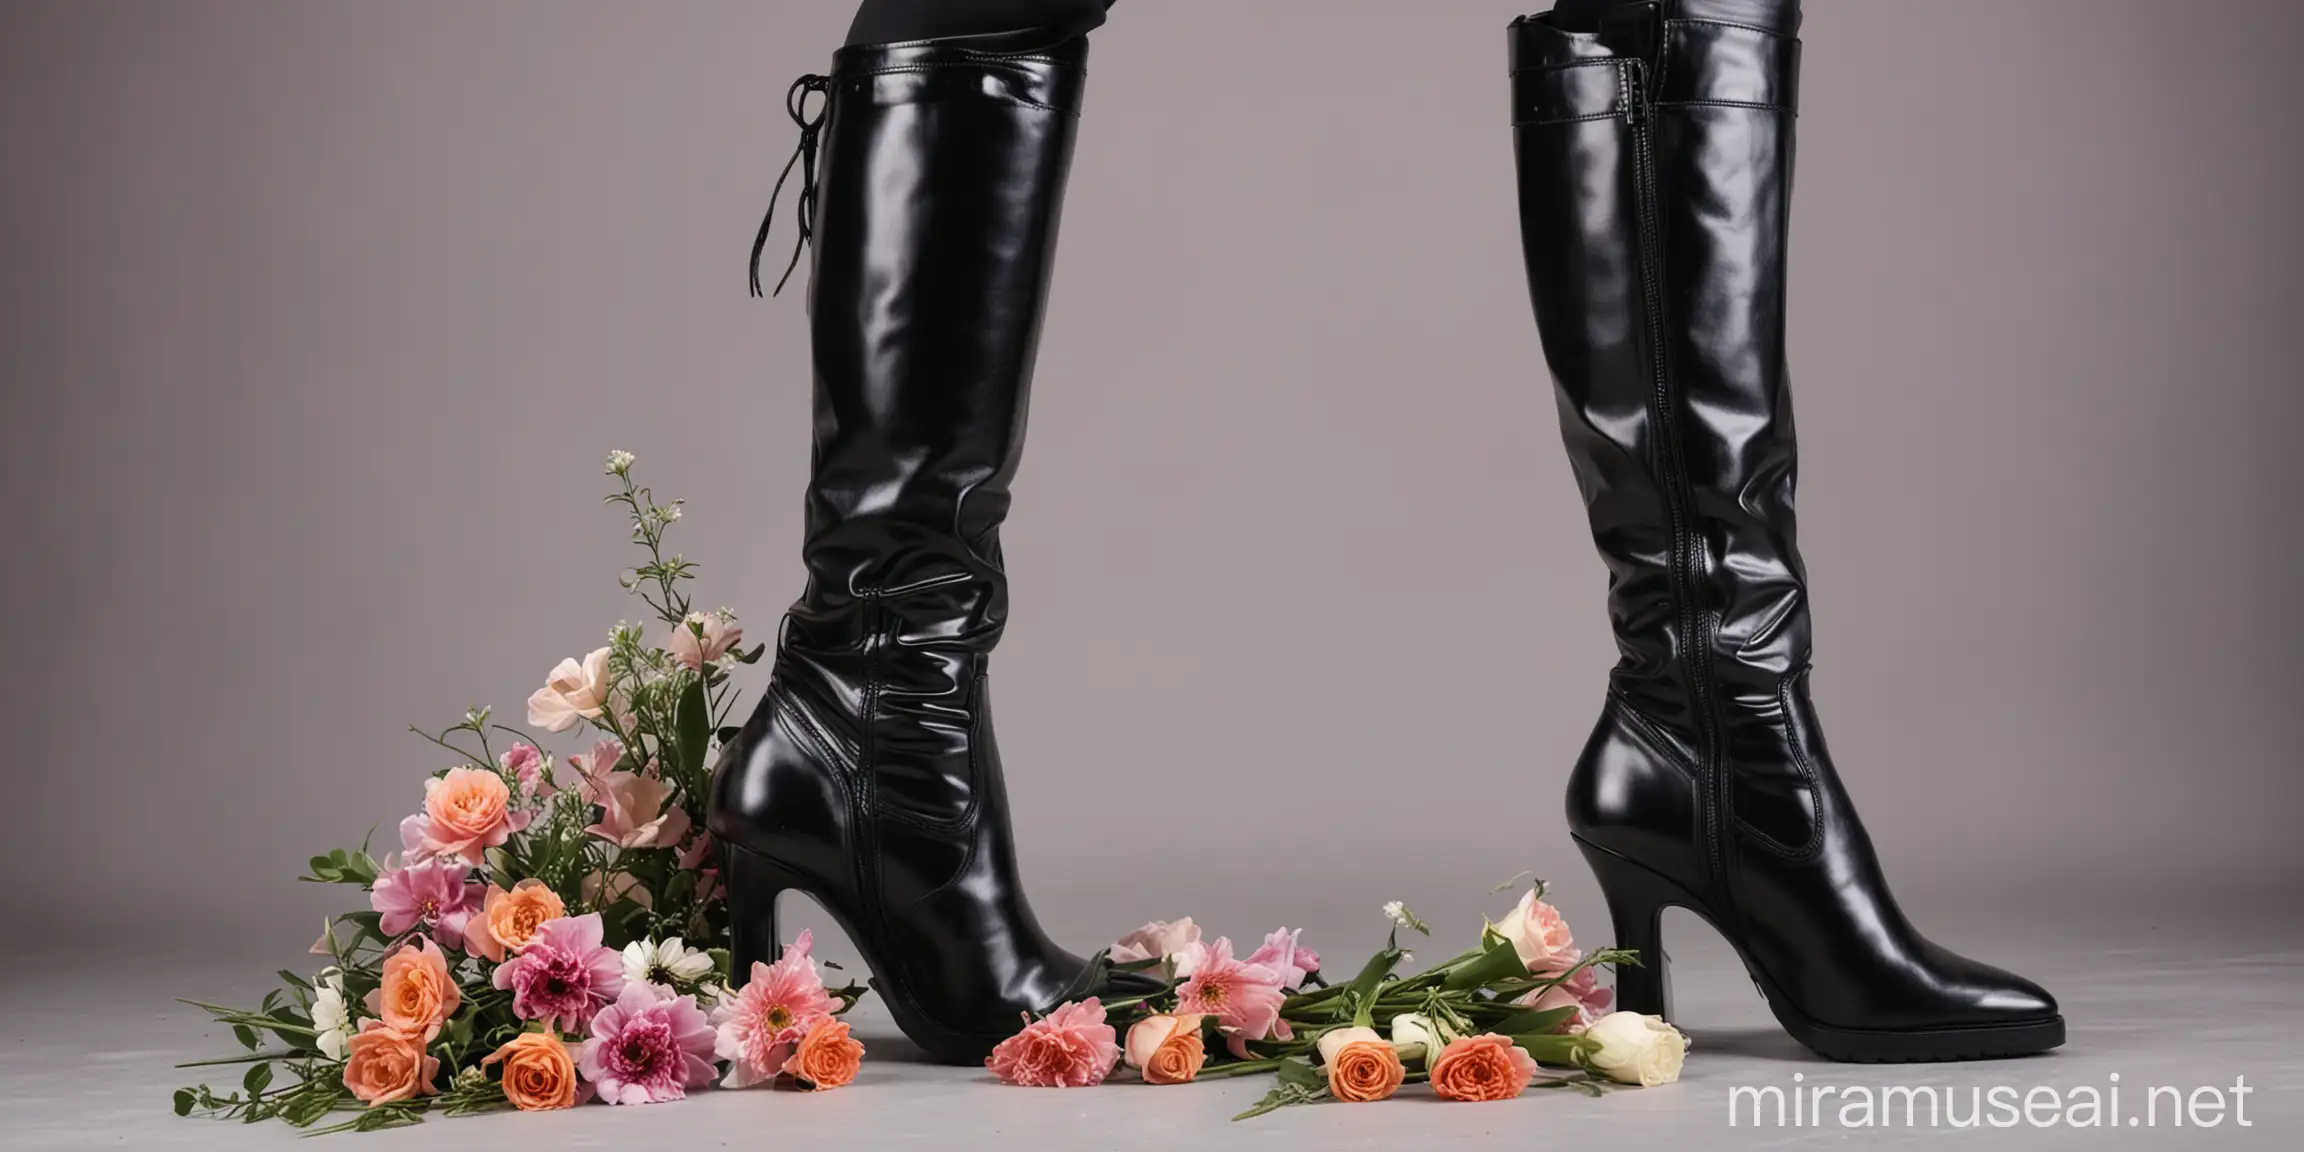 Black Vinyl Stiletto Heel Boot Crushing Flowers